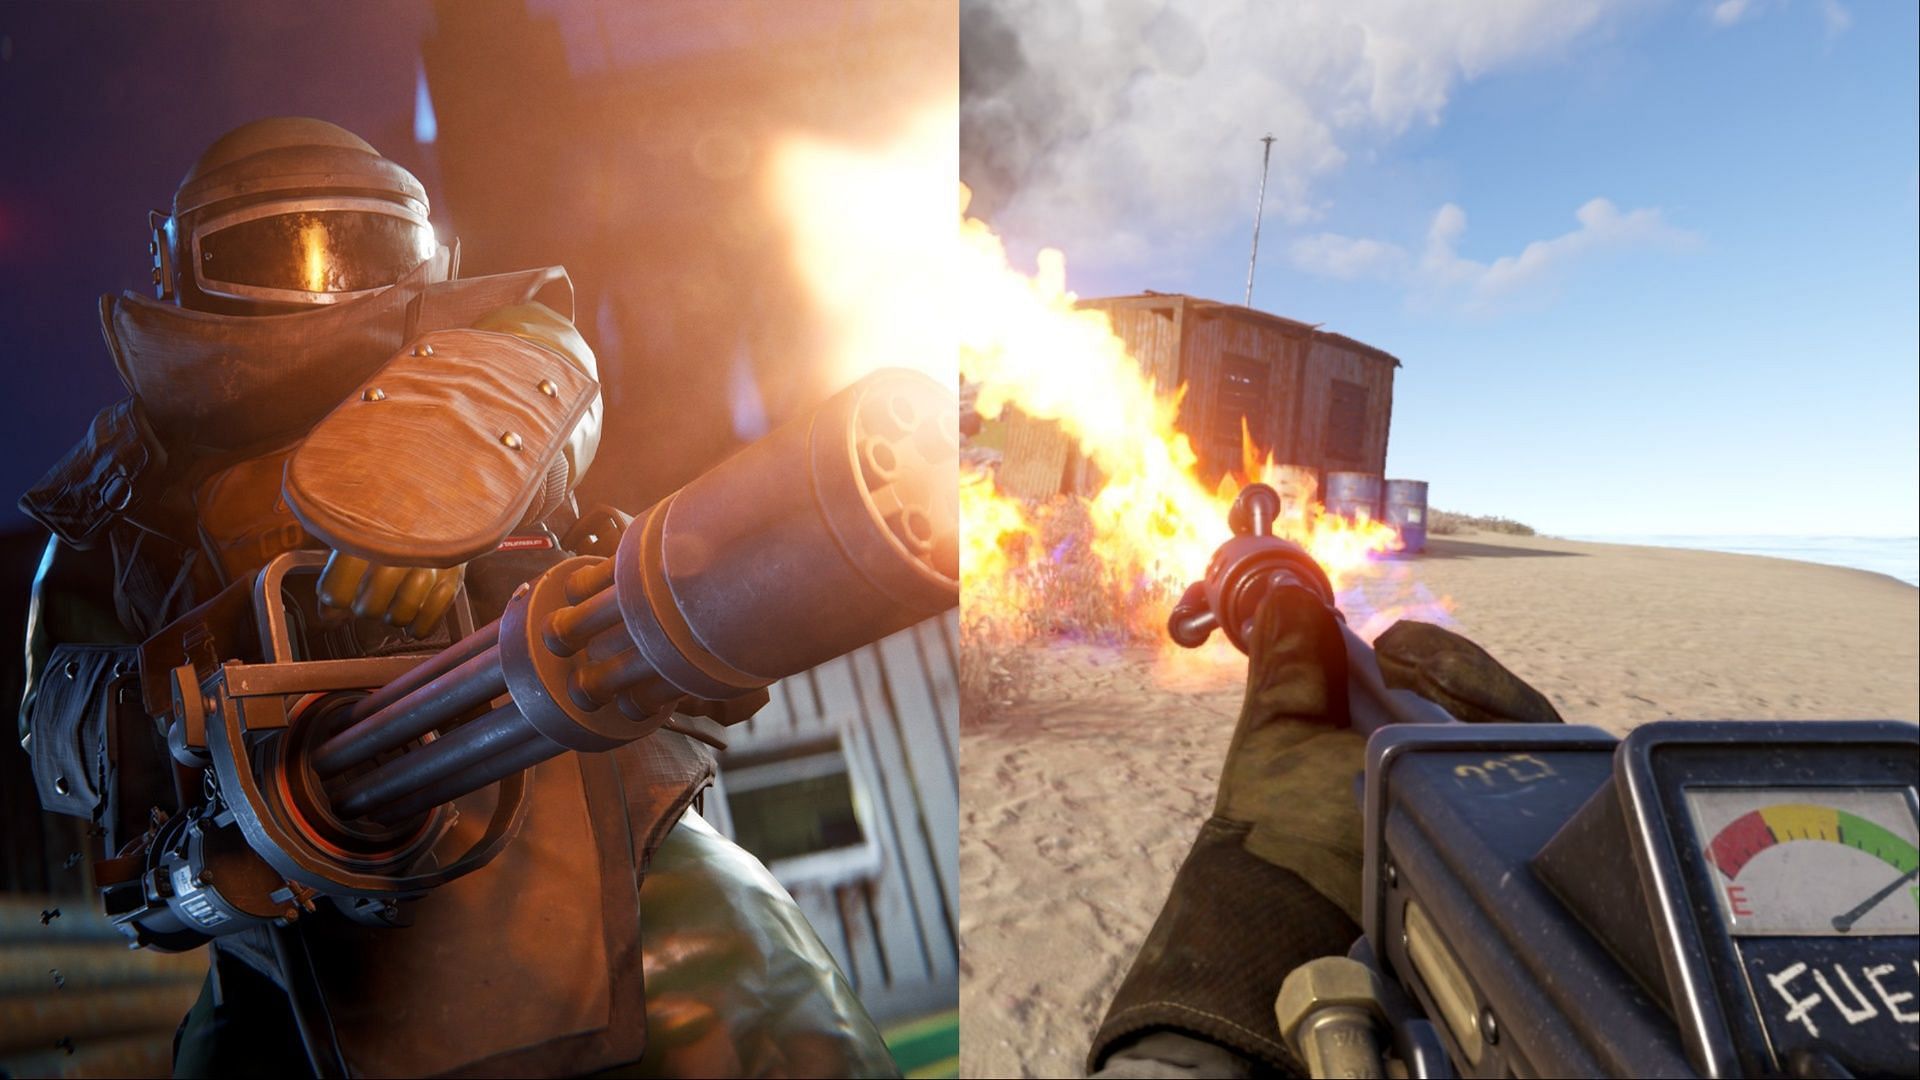 Rust Minigun and Military Flamethrower